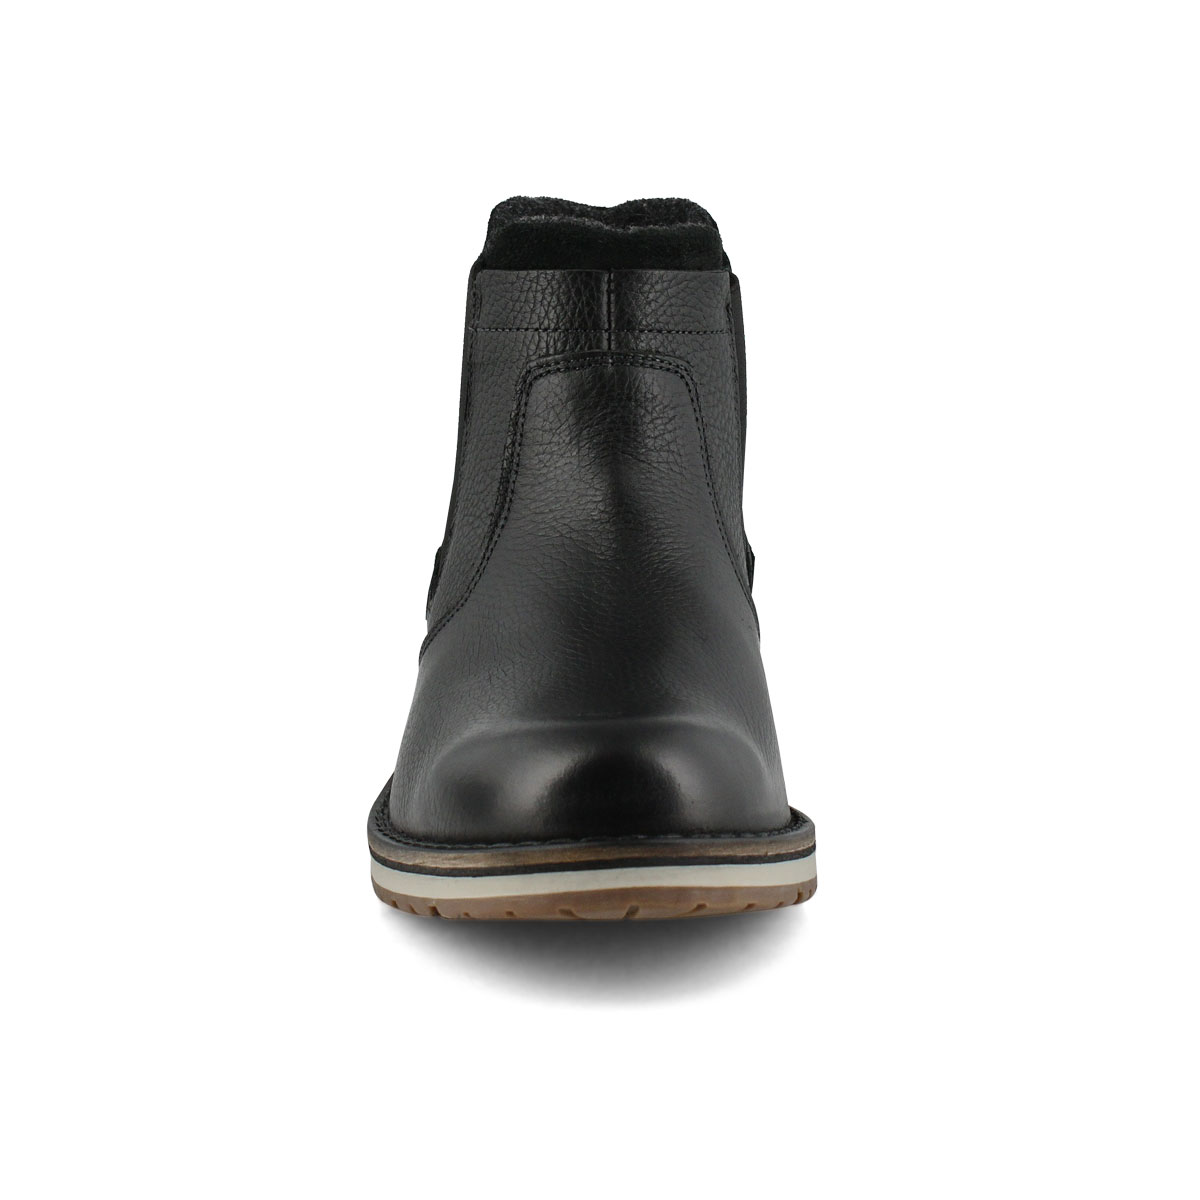 Men's Calvin Chelsea Boot - Black